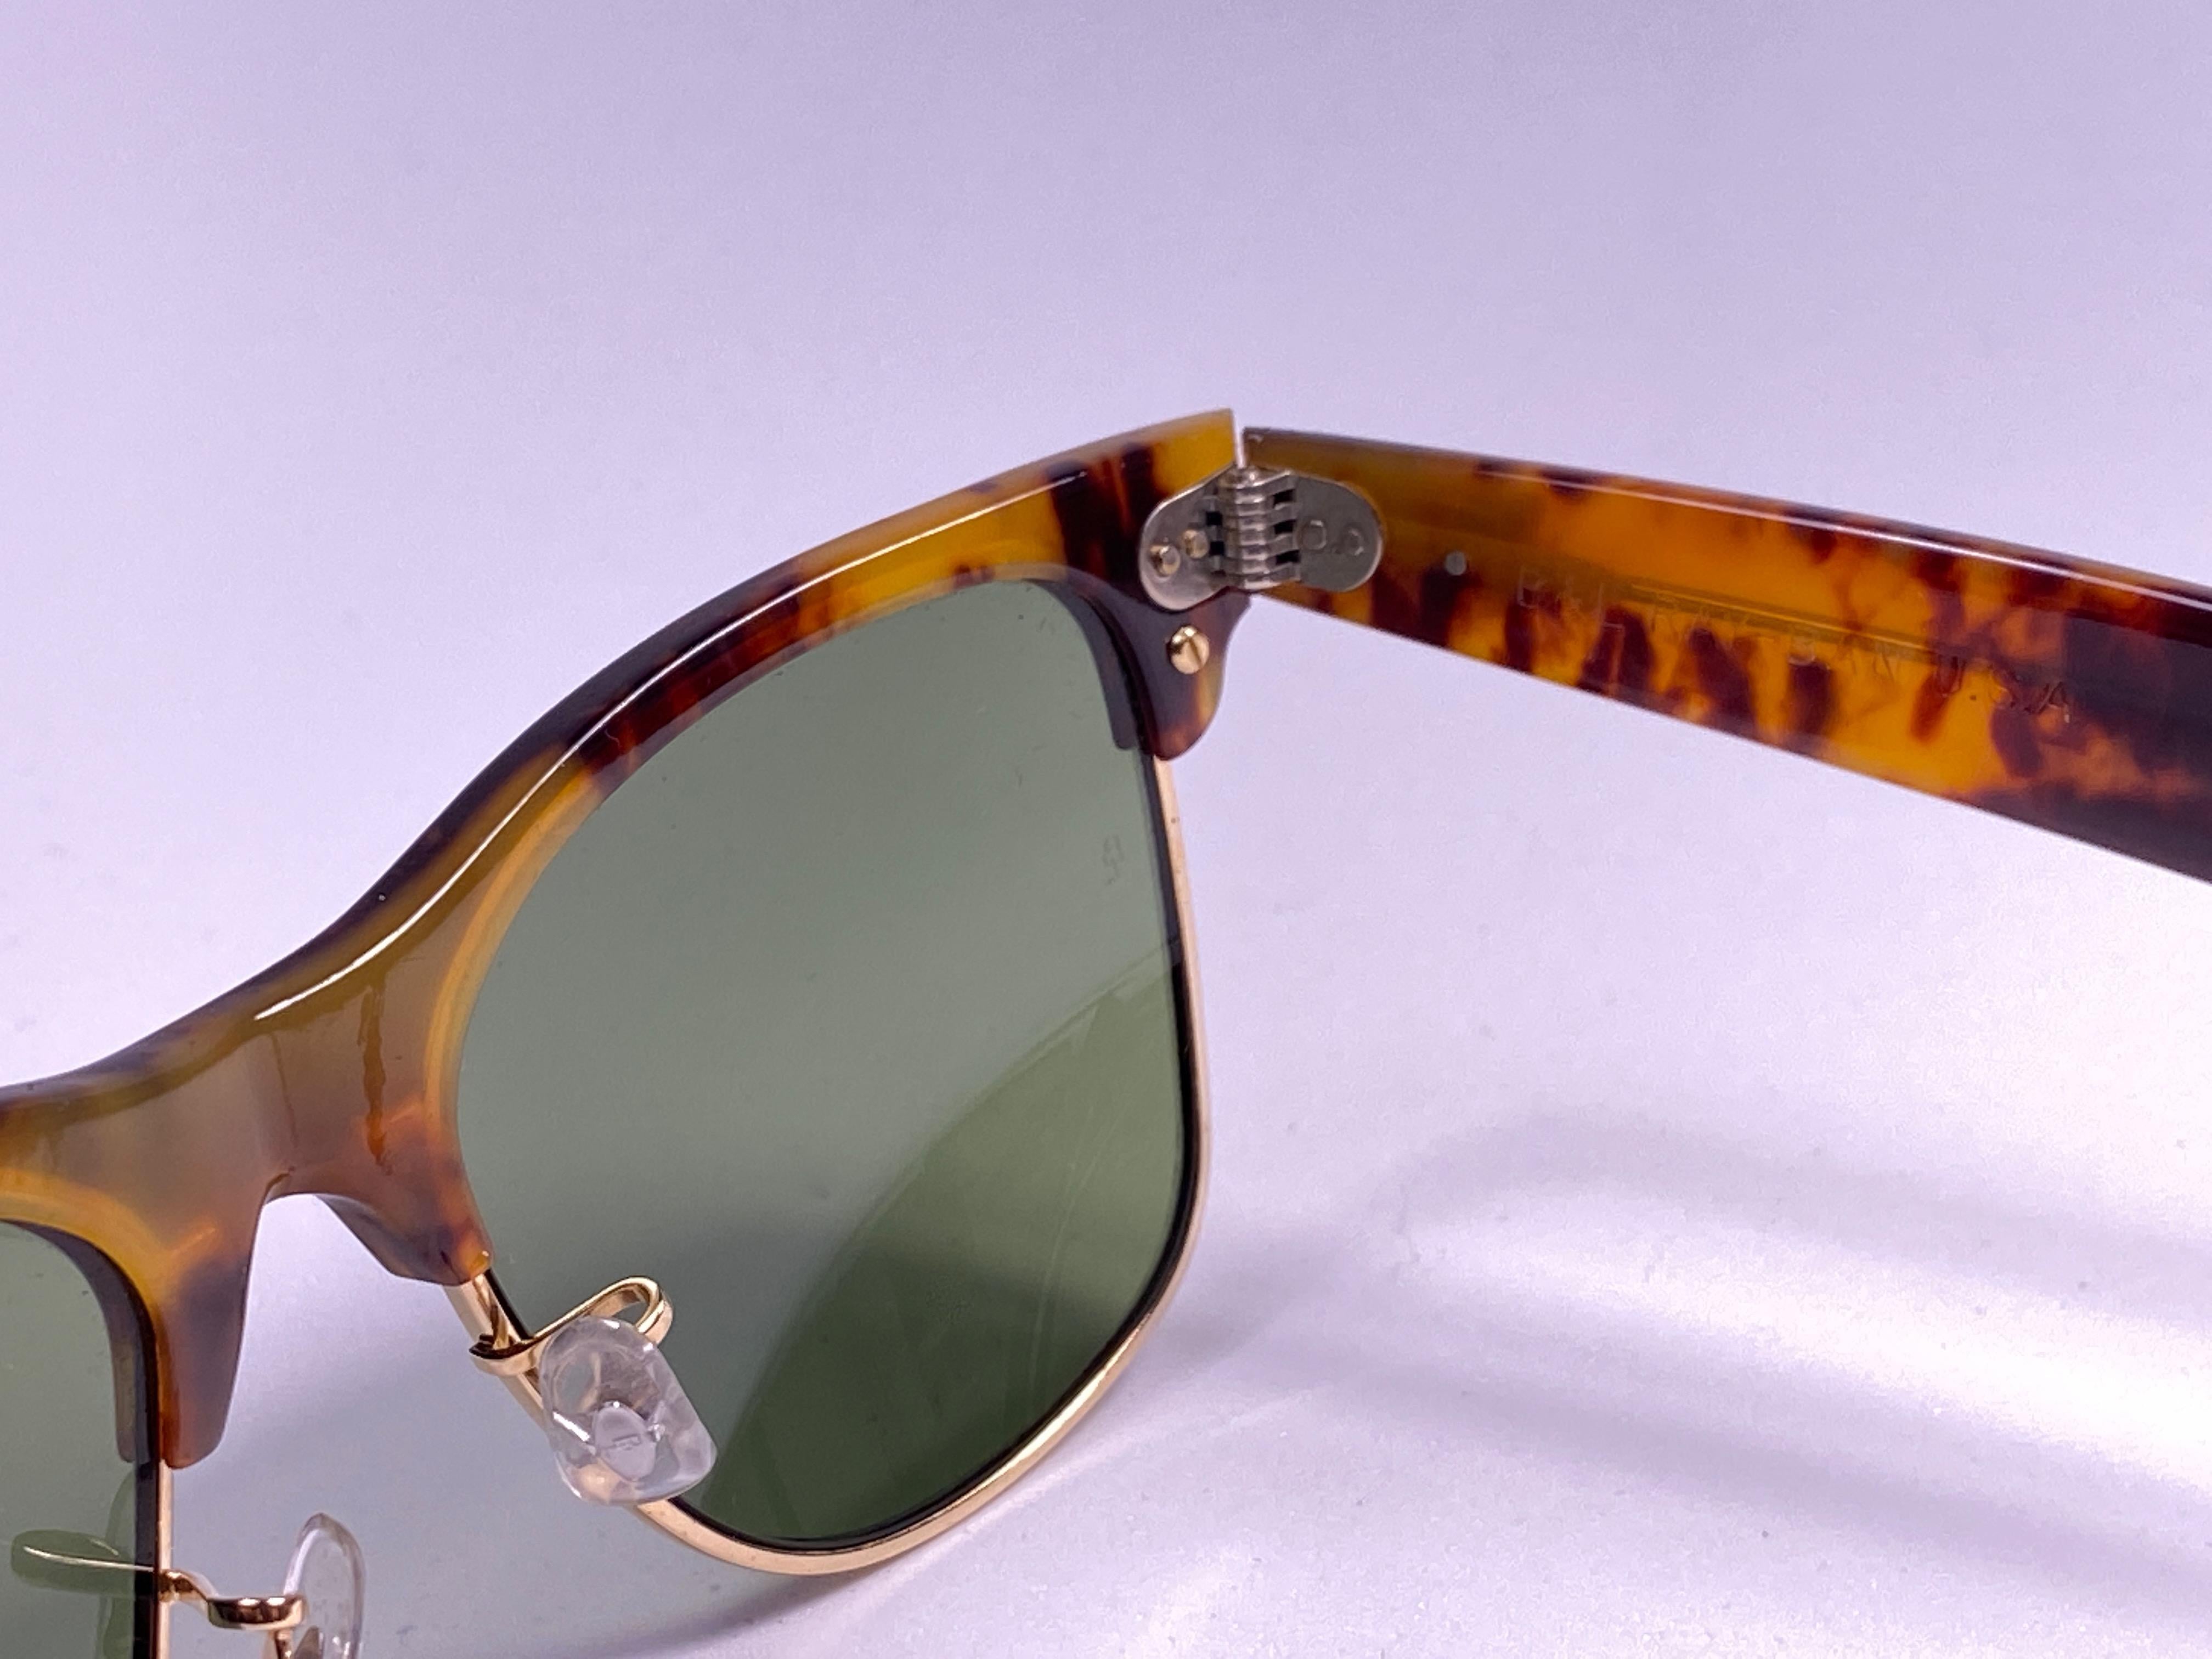 Black New Ray Ban Wayfarer Max Medium Tortoise RB3 Lenses USA 80's Sunglasses